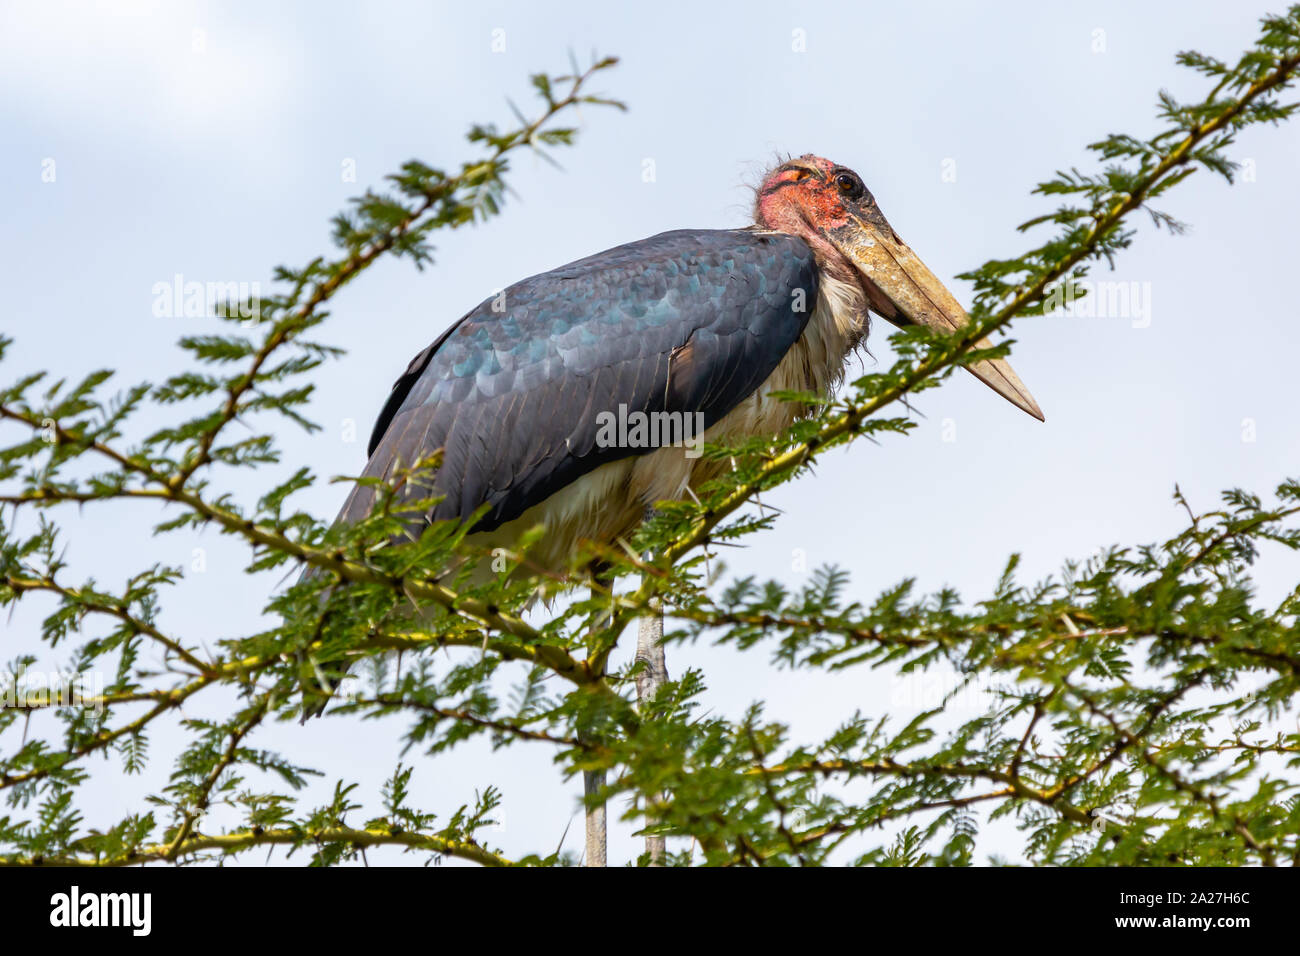 Photograph of a Marabou stork (Leptoptilos crumenifer) perched in tree top, taken in Kenya. Stock Photo